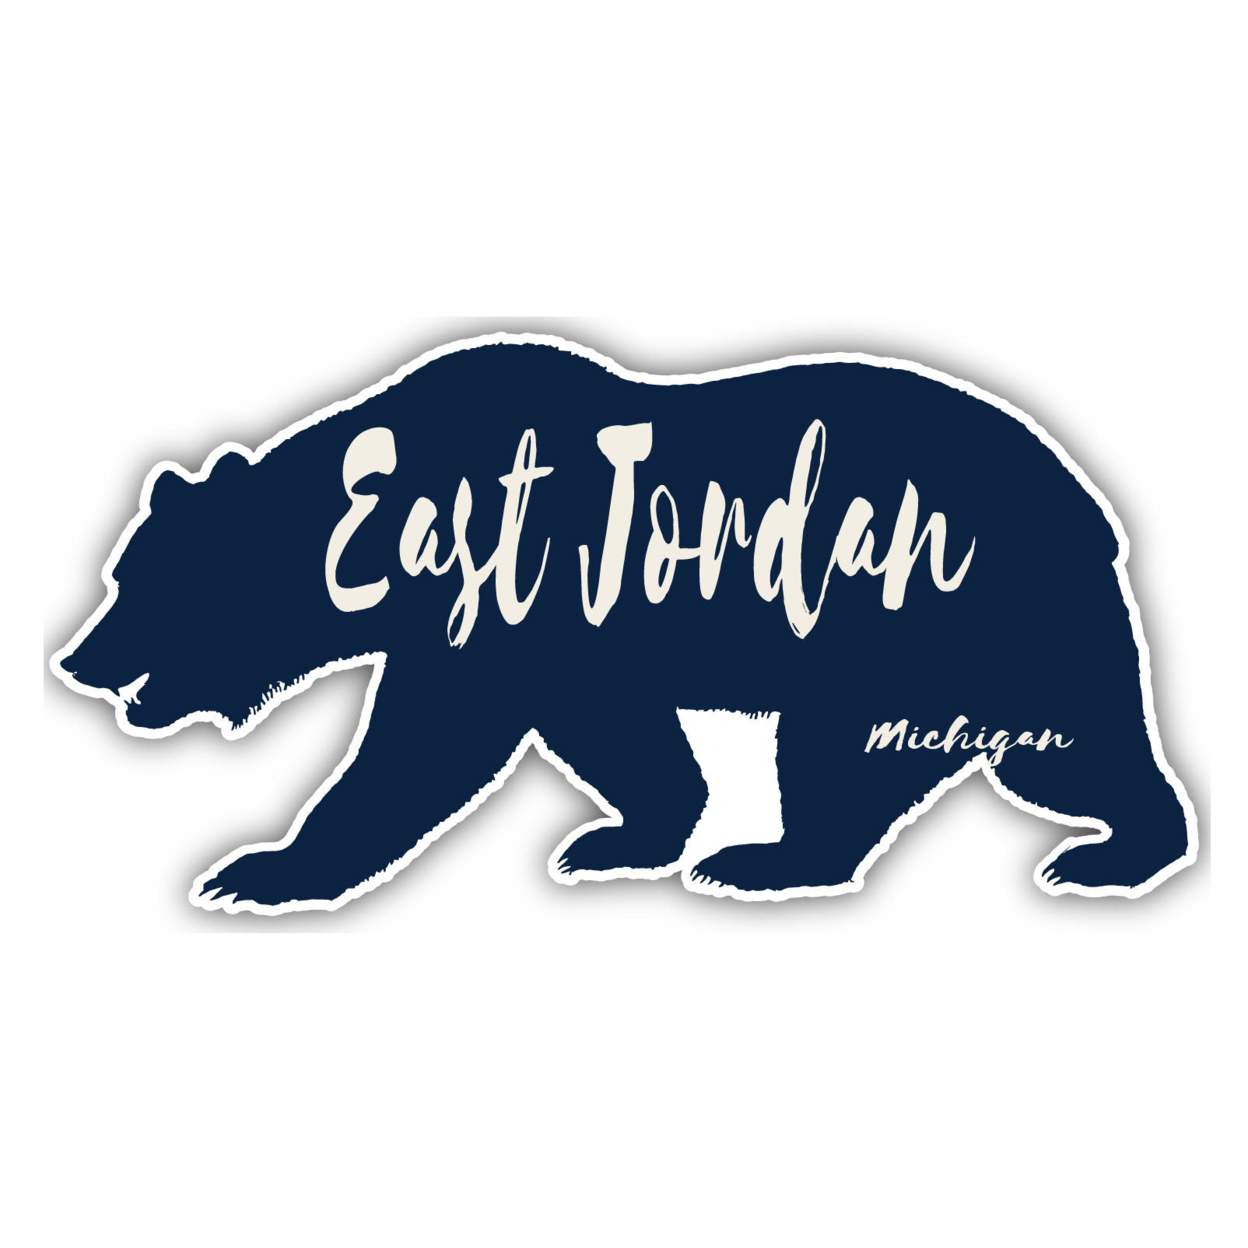 East Jordan Michigan Souvenir Decorative Stickers (Choose Theme And Size) - 4-Pack, 10-Inch, Bear